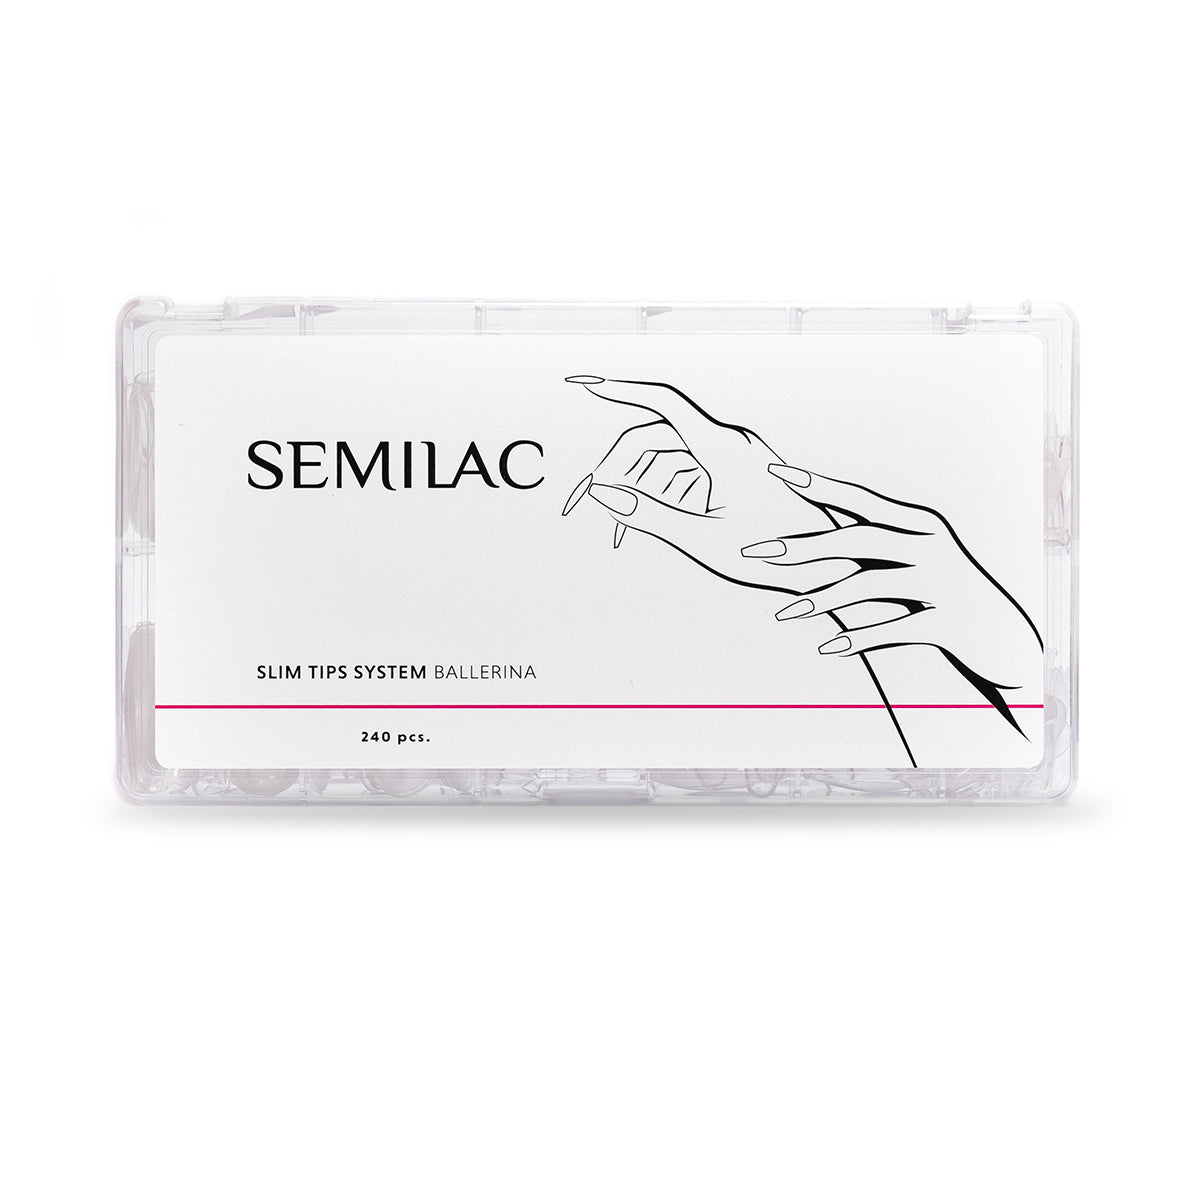 Semilac Slim Tips System Ballerina 240 pcs. - Semilac UK